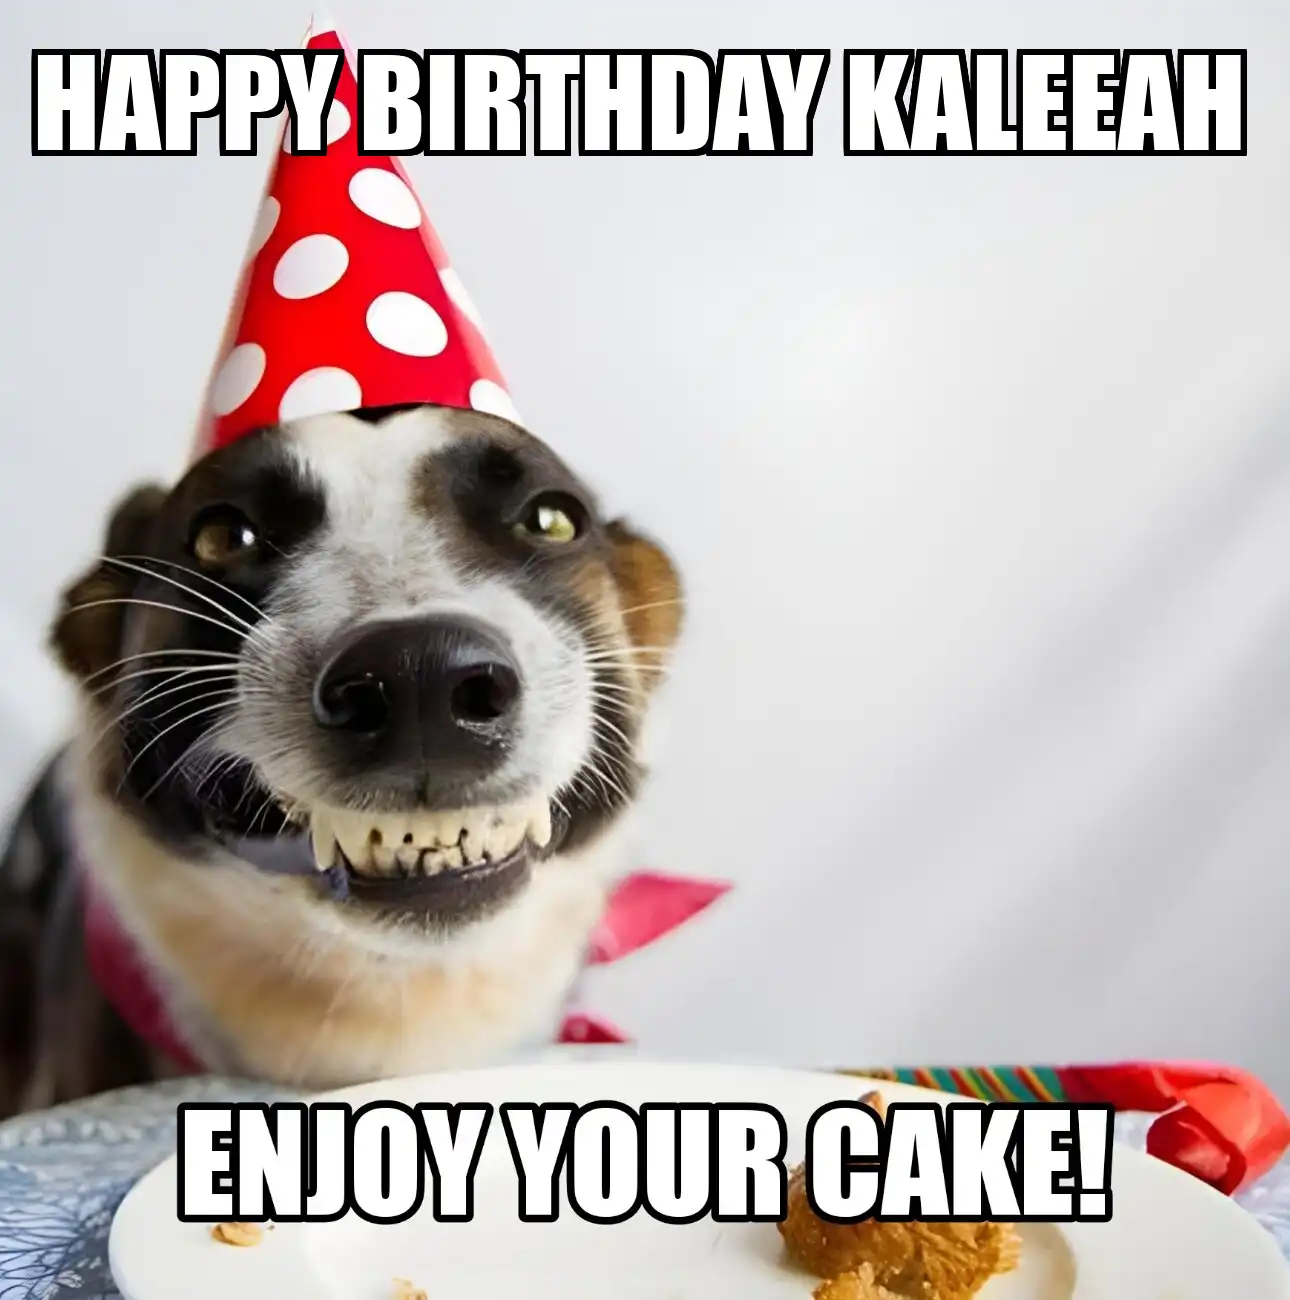 Happy Birthday Kaleeah Enjoy Your Cake Dog Meme